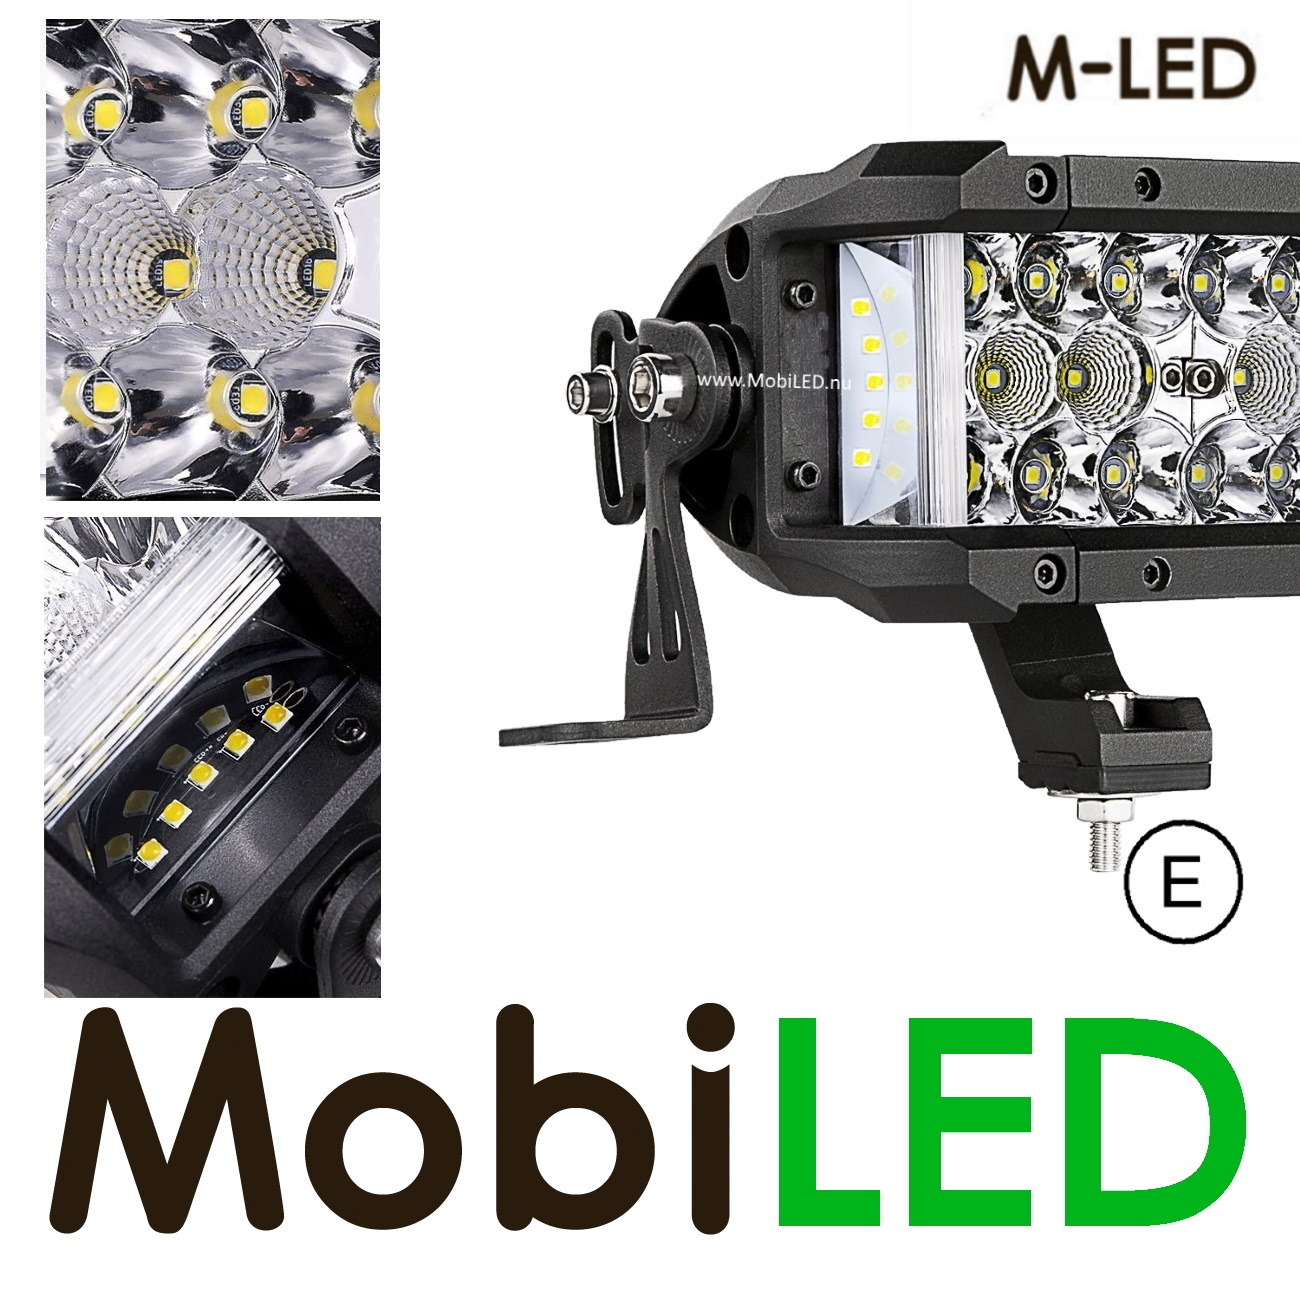 M-LED 31.5" Side Shooter led light bar